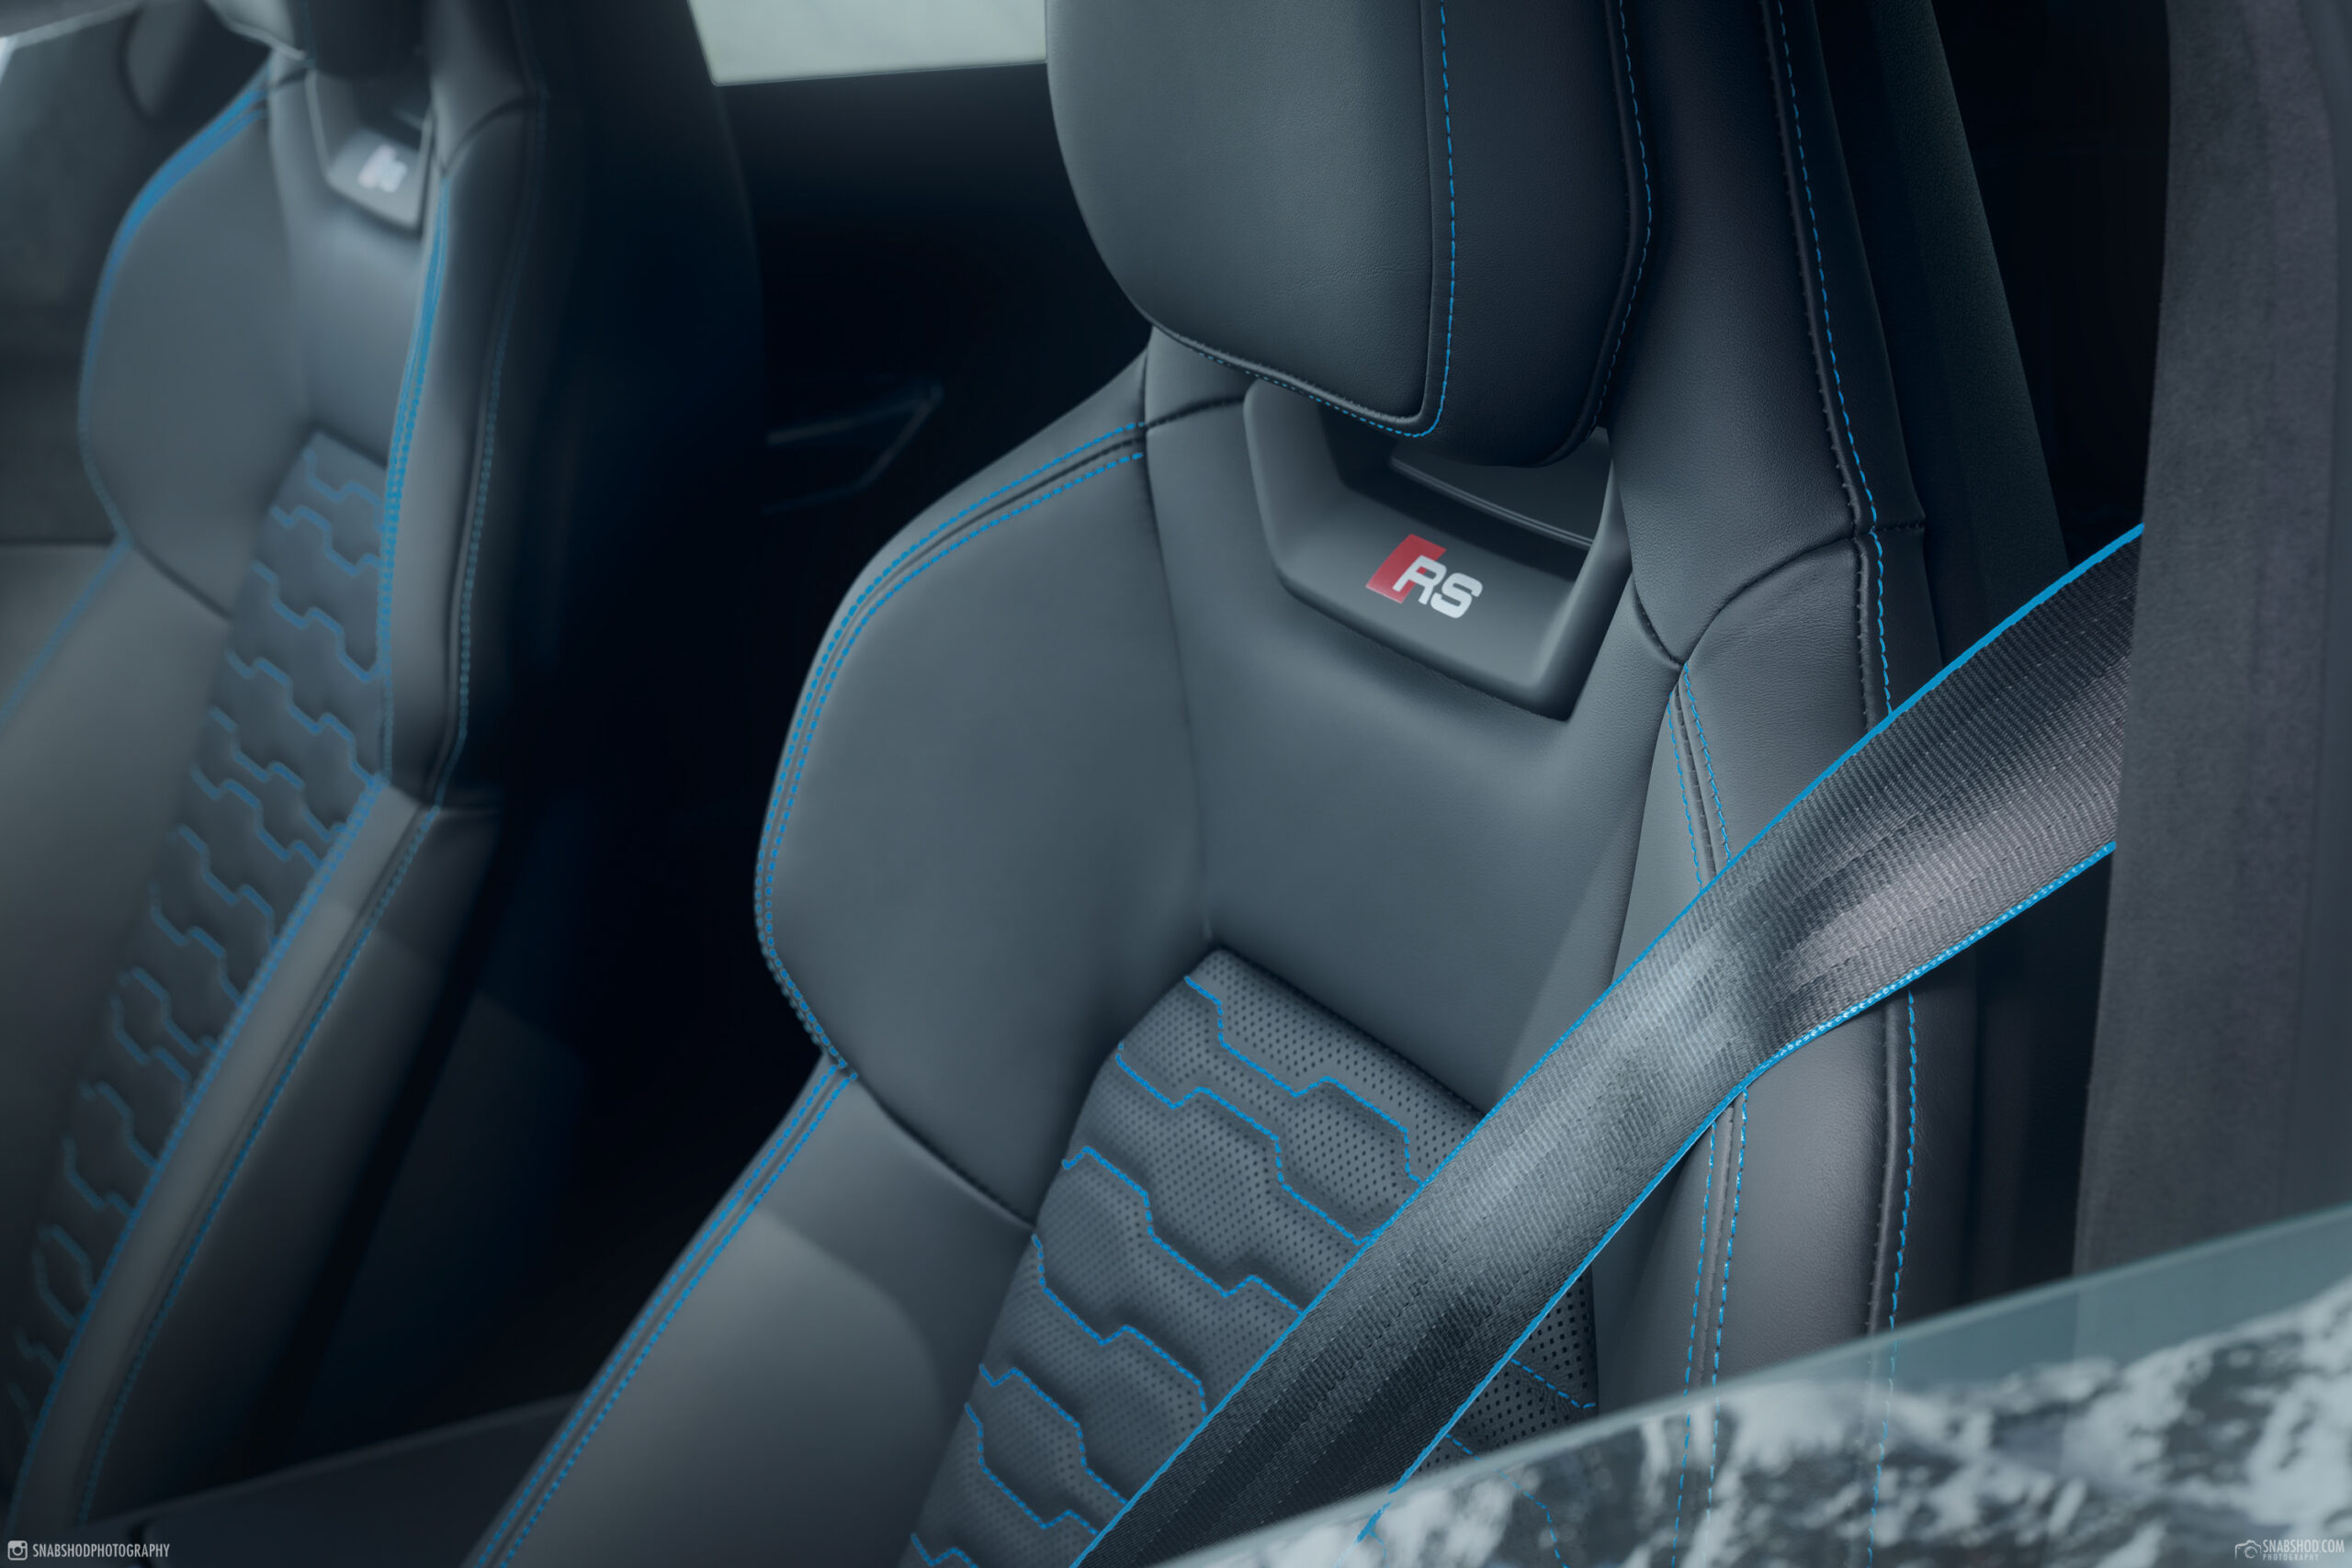 Audi RS e-tron GT riviera